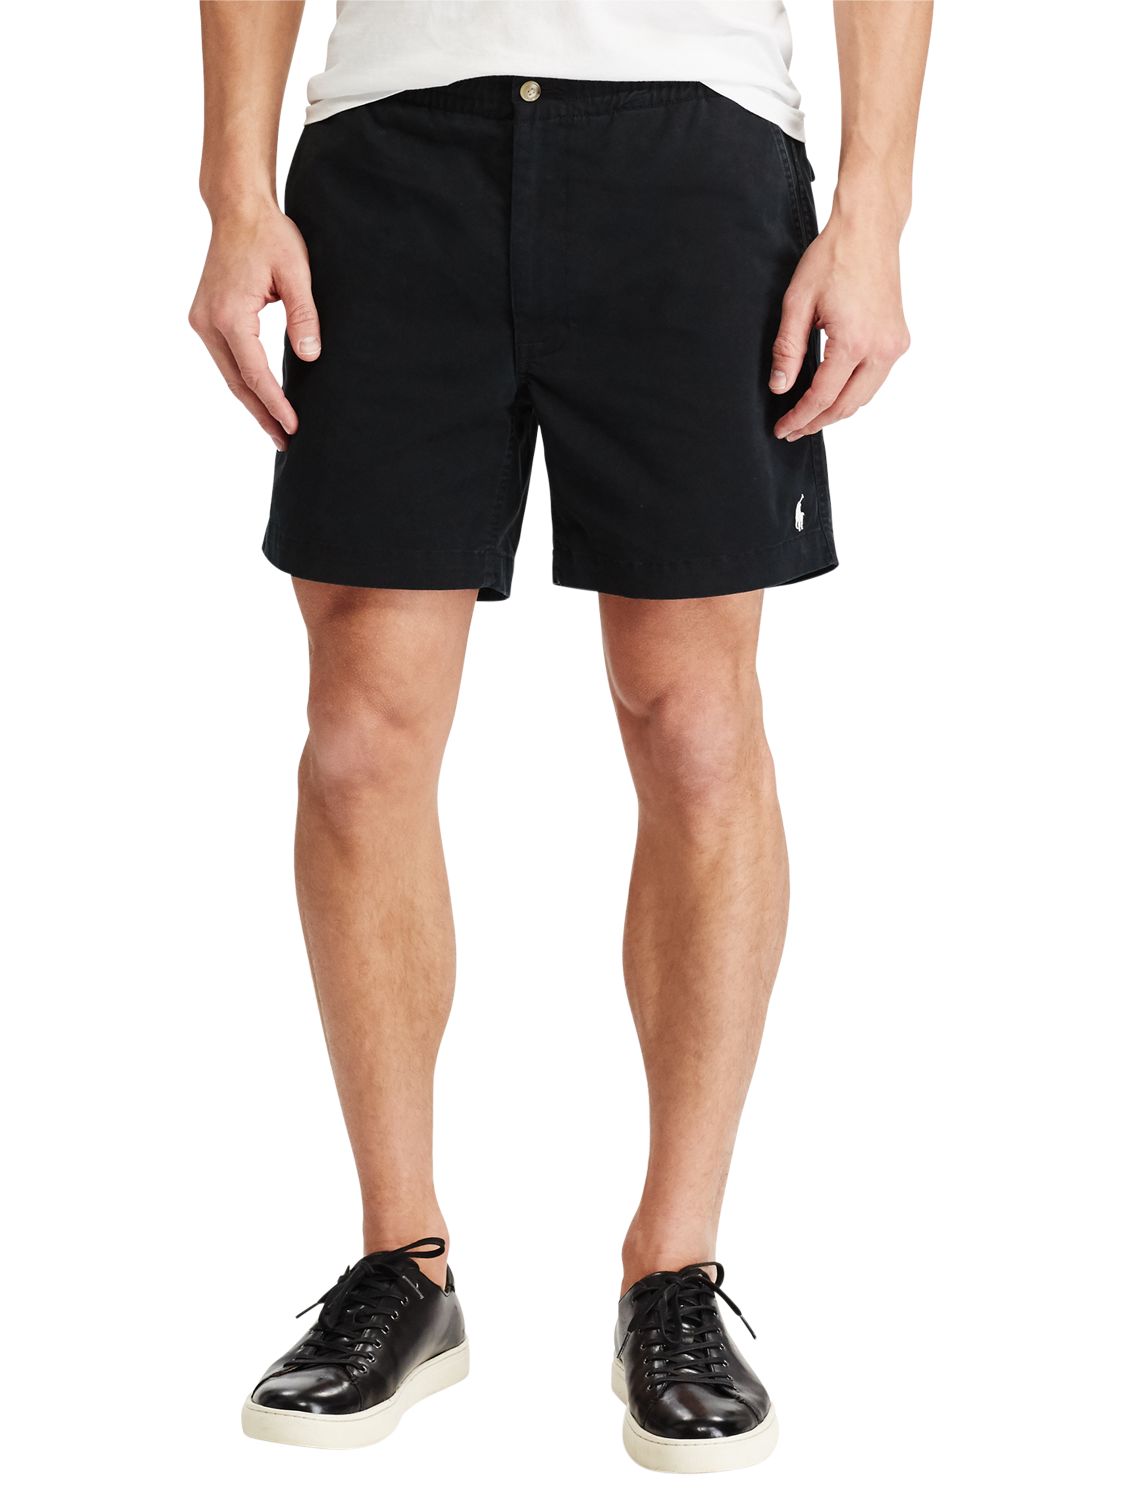 polo ralph lauren black shorts